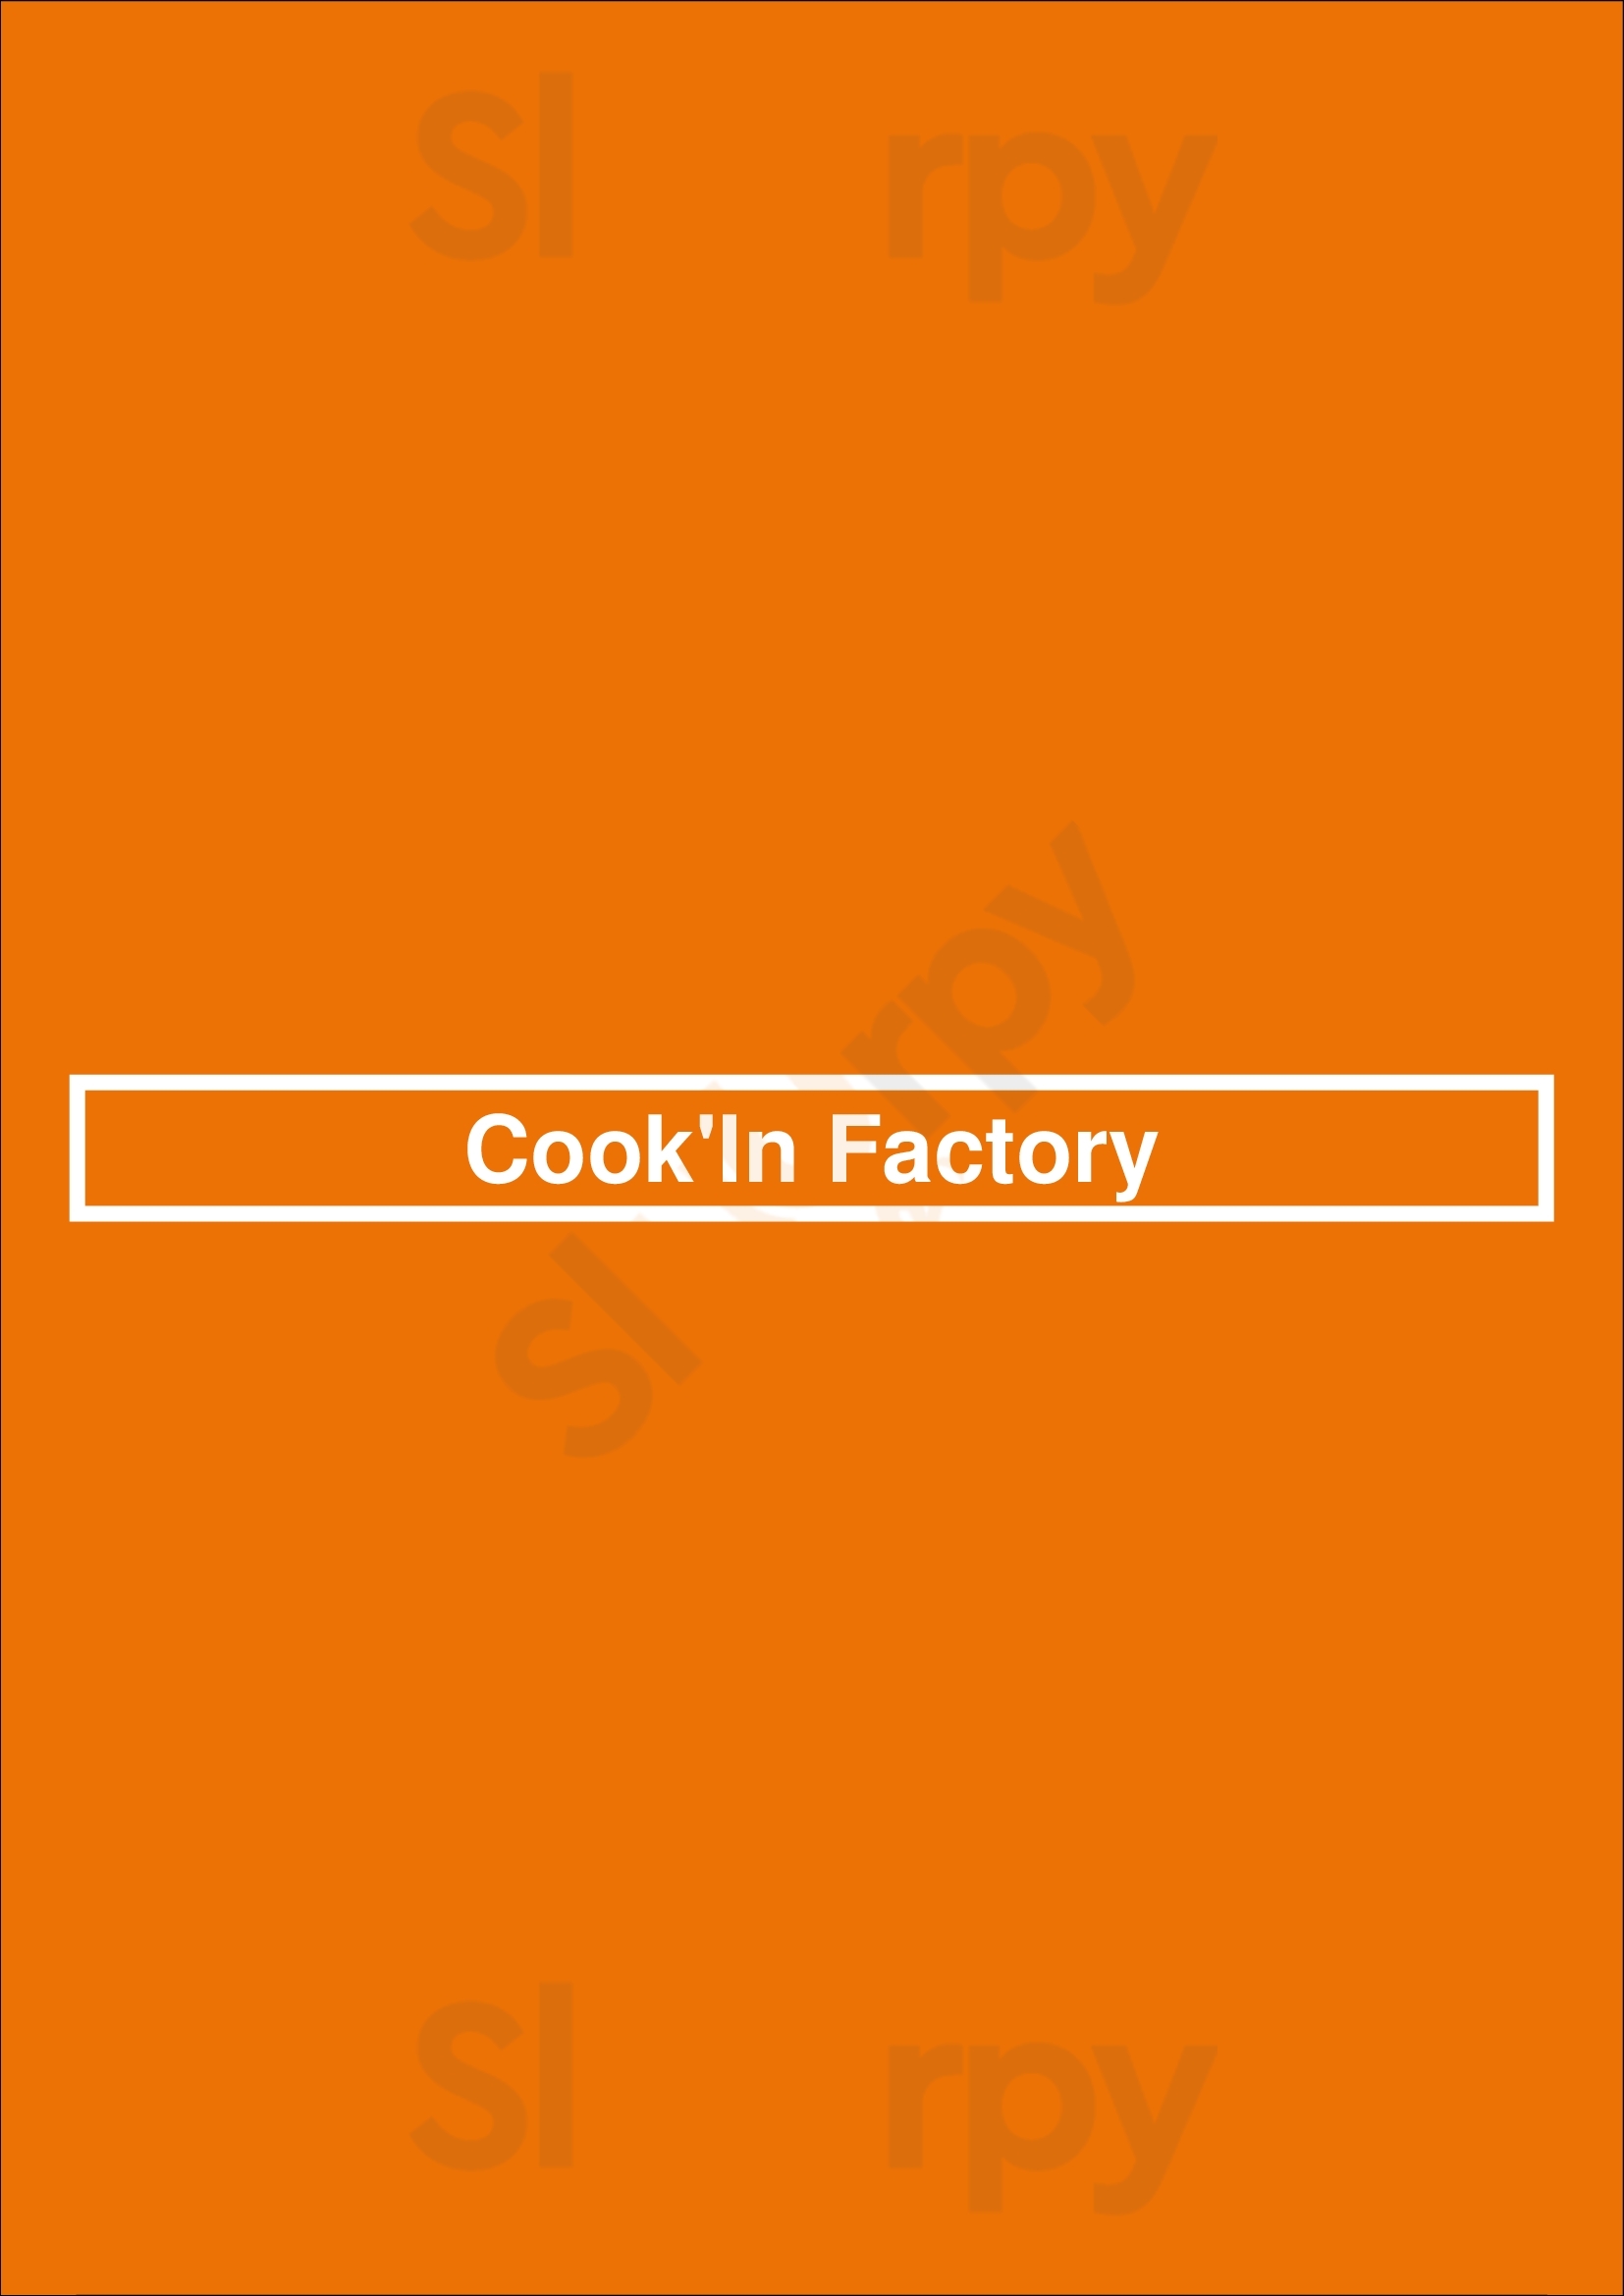 Cook'in Factory Malmedy Menu - 1